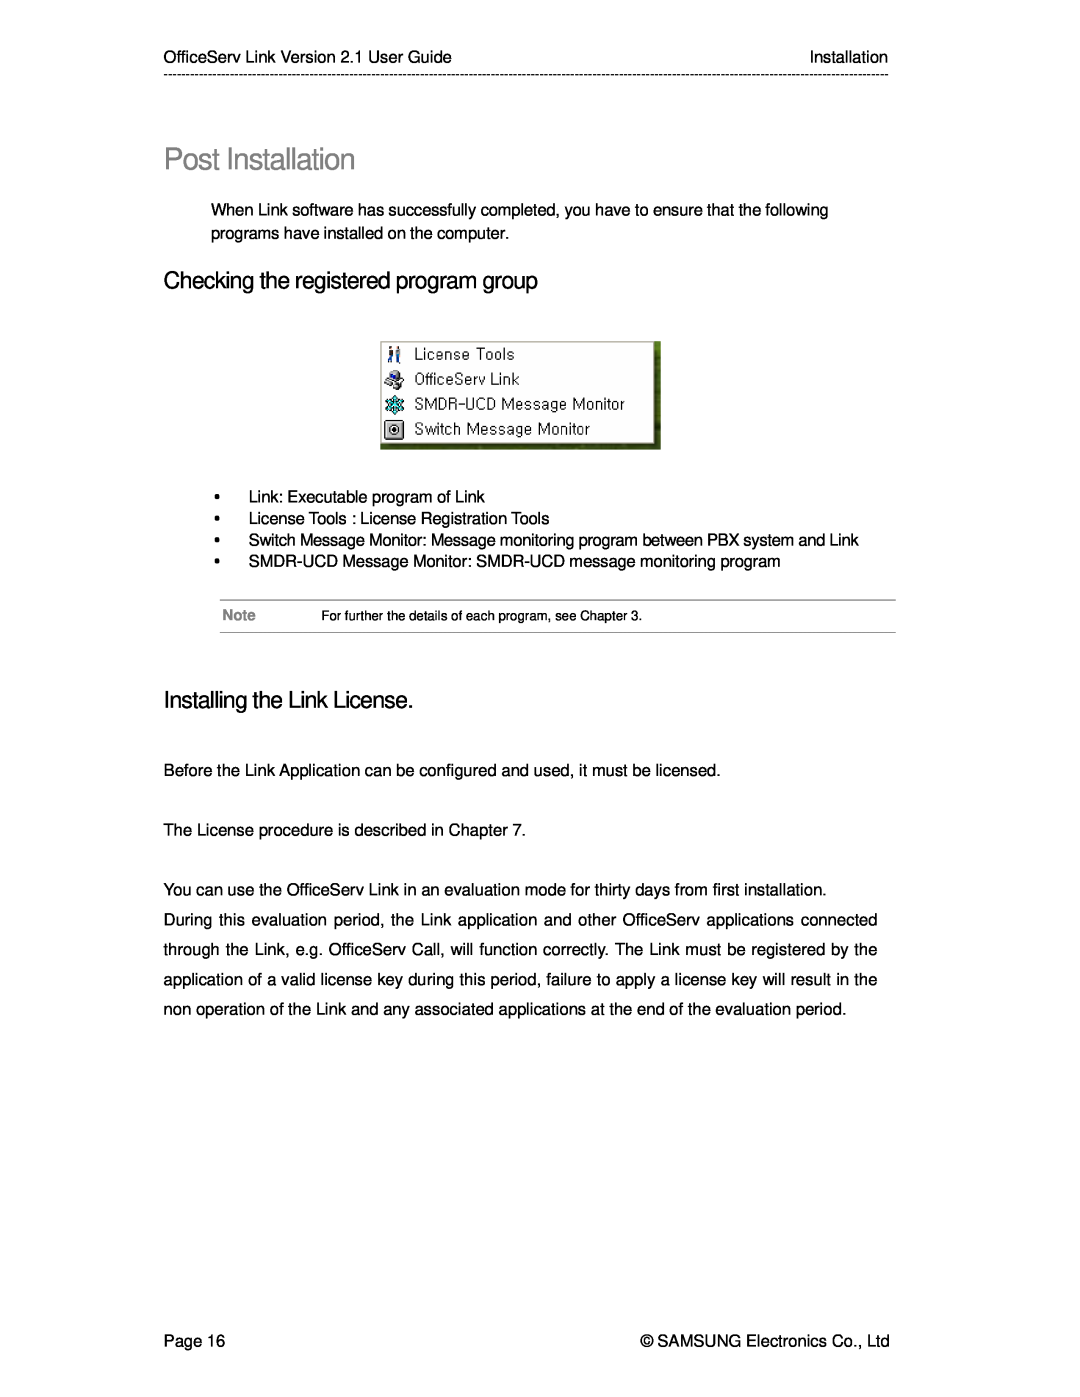 Samsung Version 2.1 manual Post Installation, Checking the registered program group, Installing the Link License 